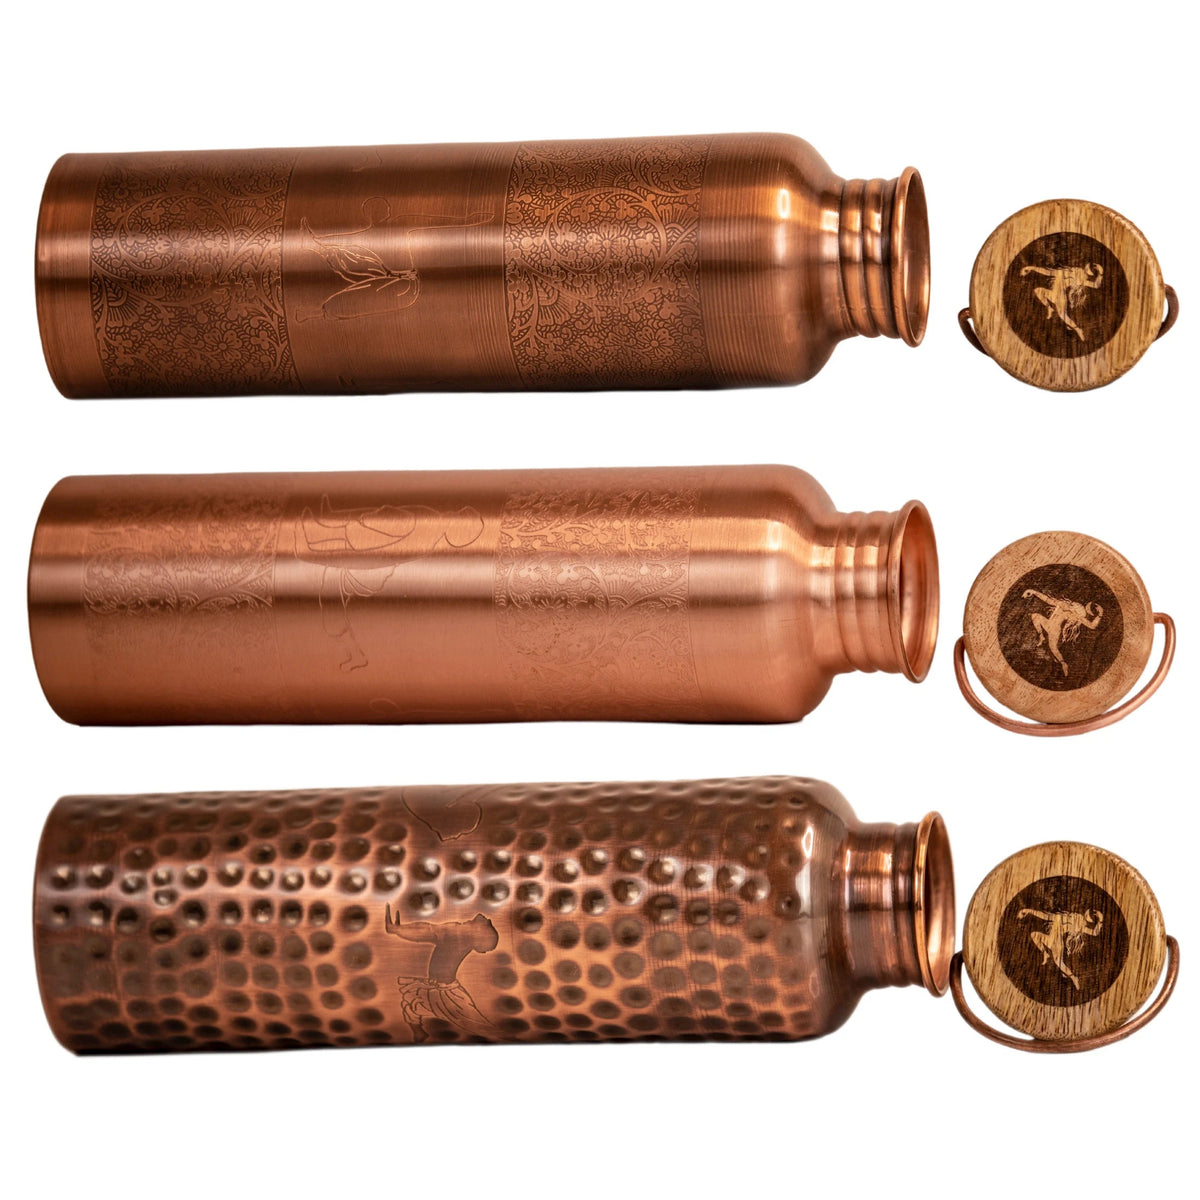 Pure Copper (99%) Bottle - Bulk Order (3-20) - Engraved Yoga Posture - Natural Water Detox / Anti Bacterial - Excellent Craft-man ship.